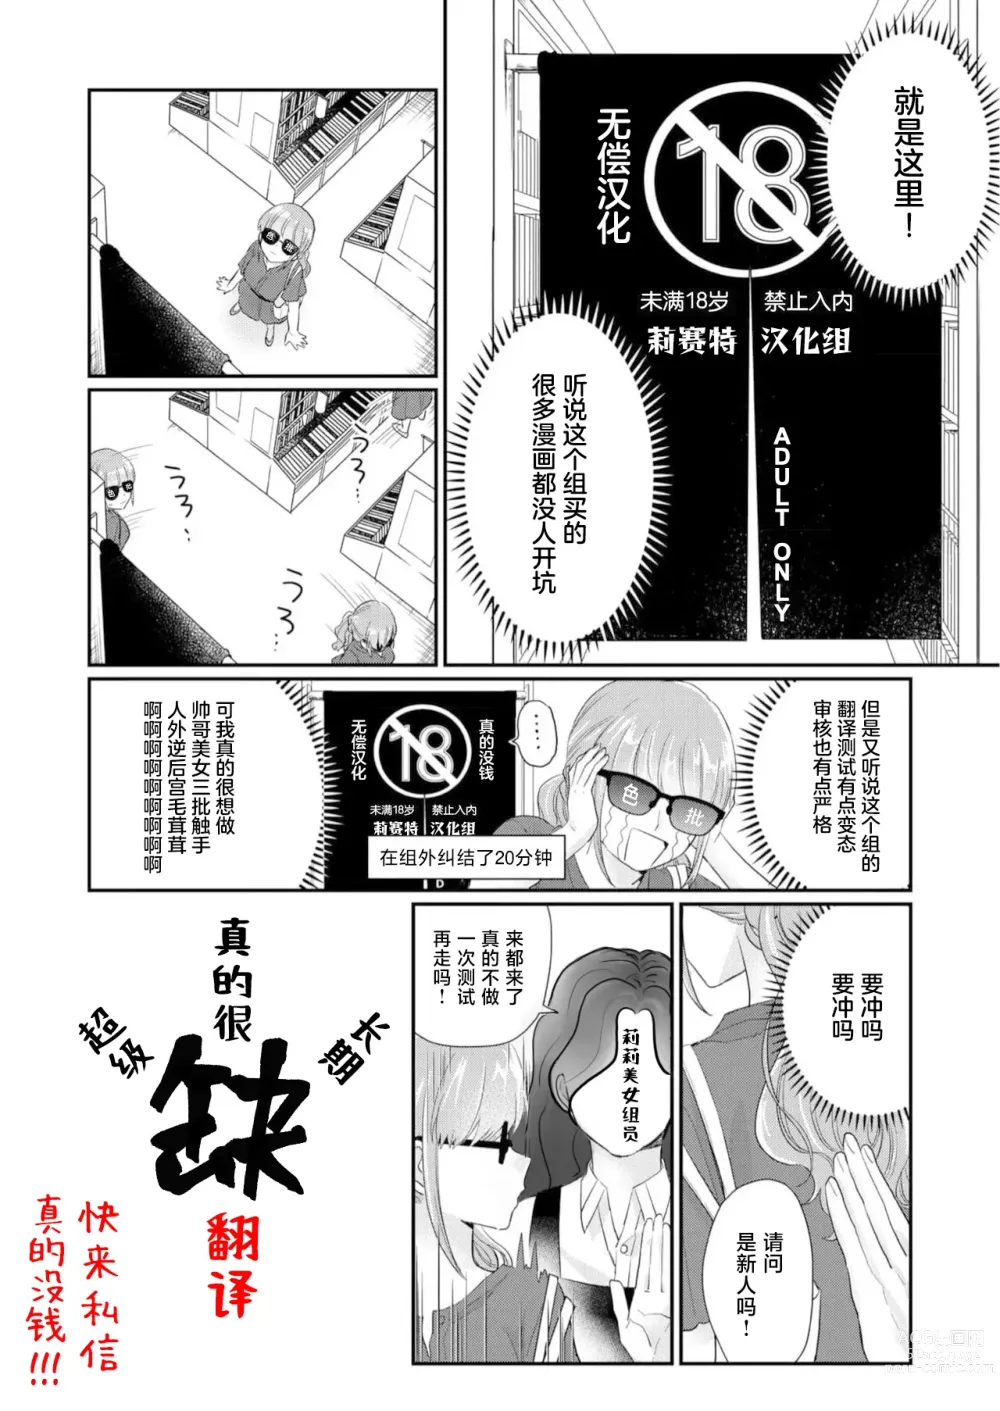 Page 274 of manga 最终BOSS转生而来，因此拿下了他的童贞 1-9 end